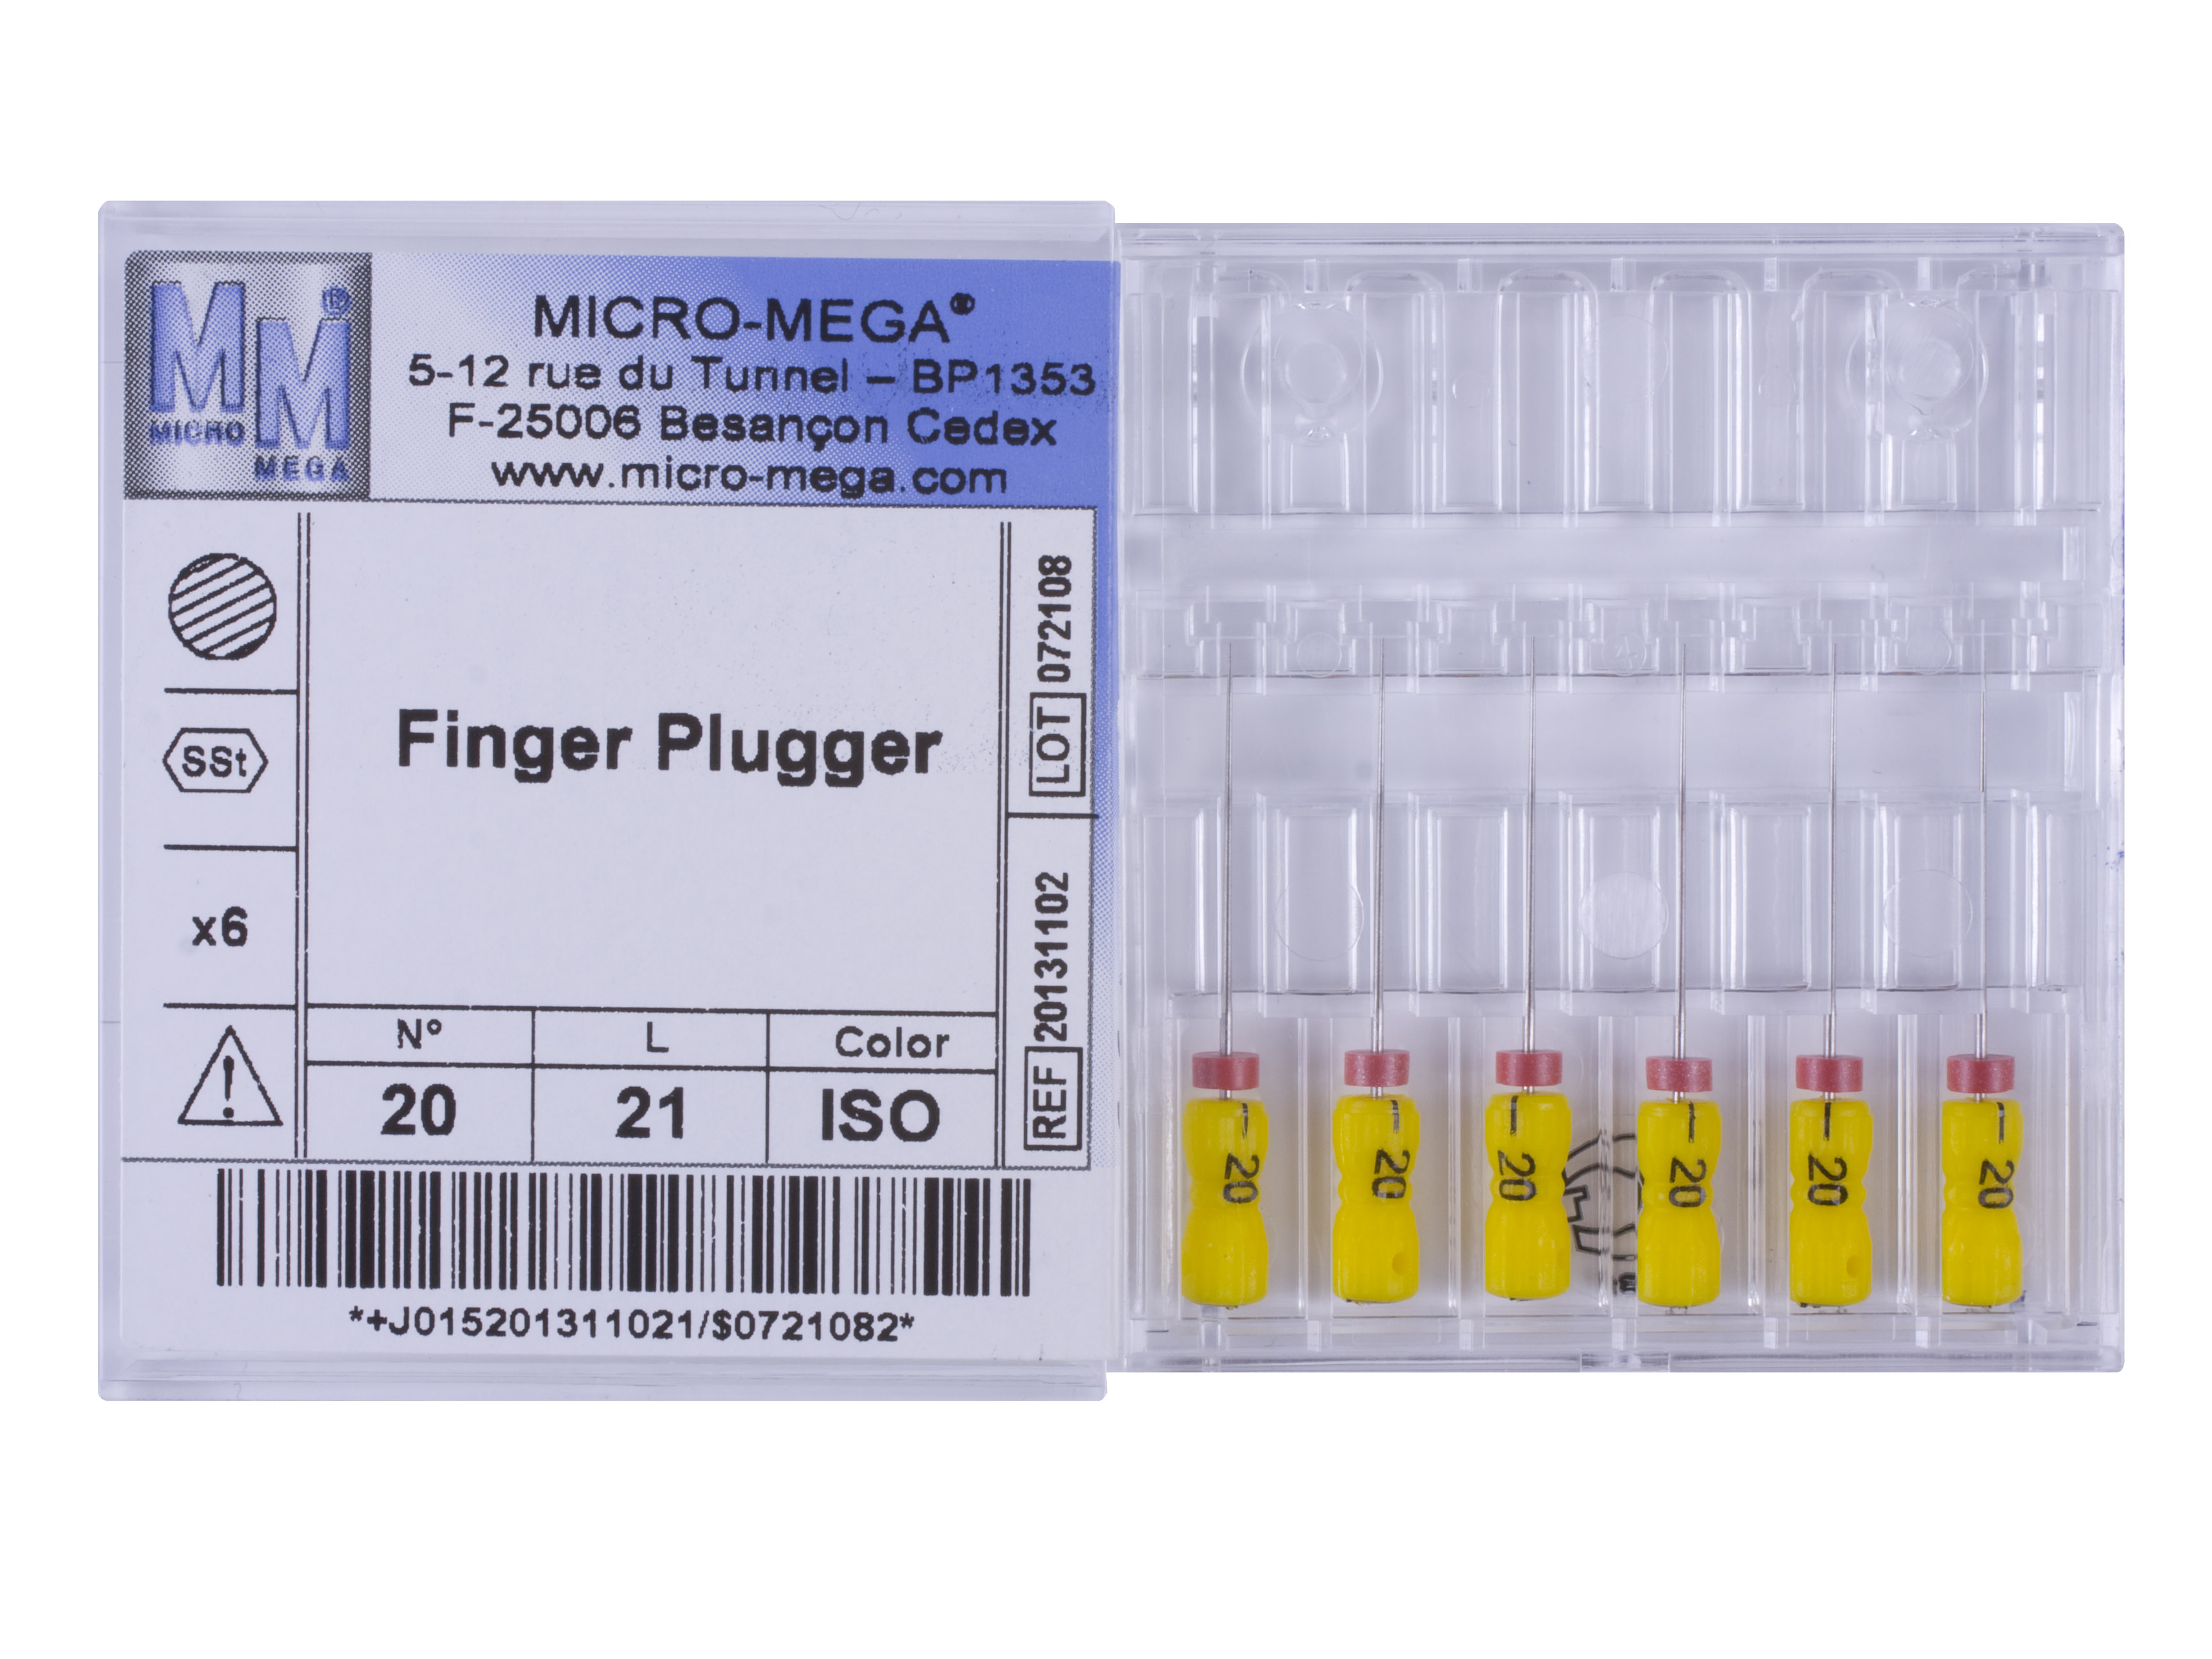 Finger Plugger n20 L21 2% (steel) - инструменты эндодонтические